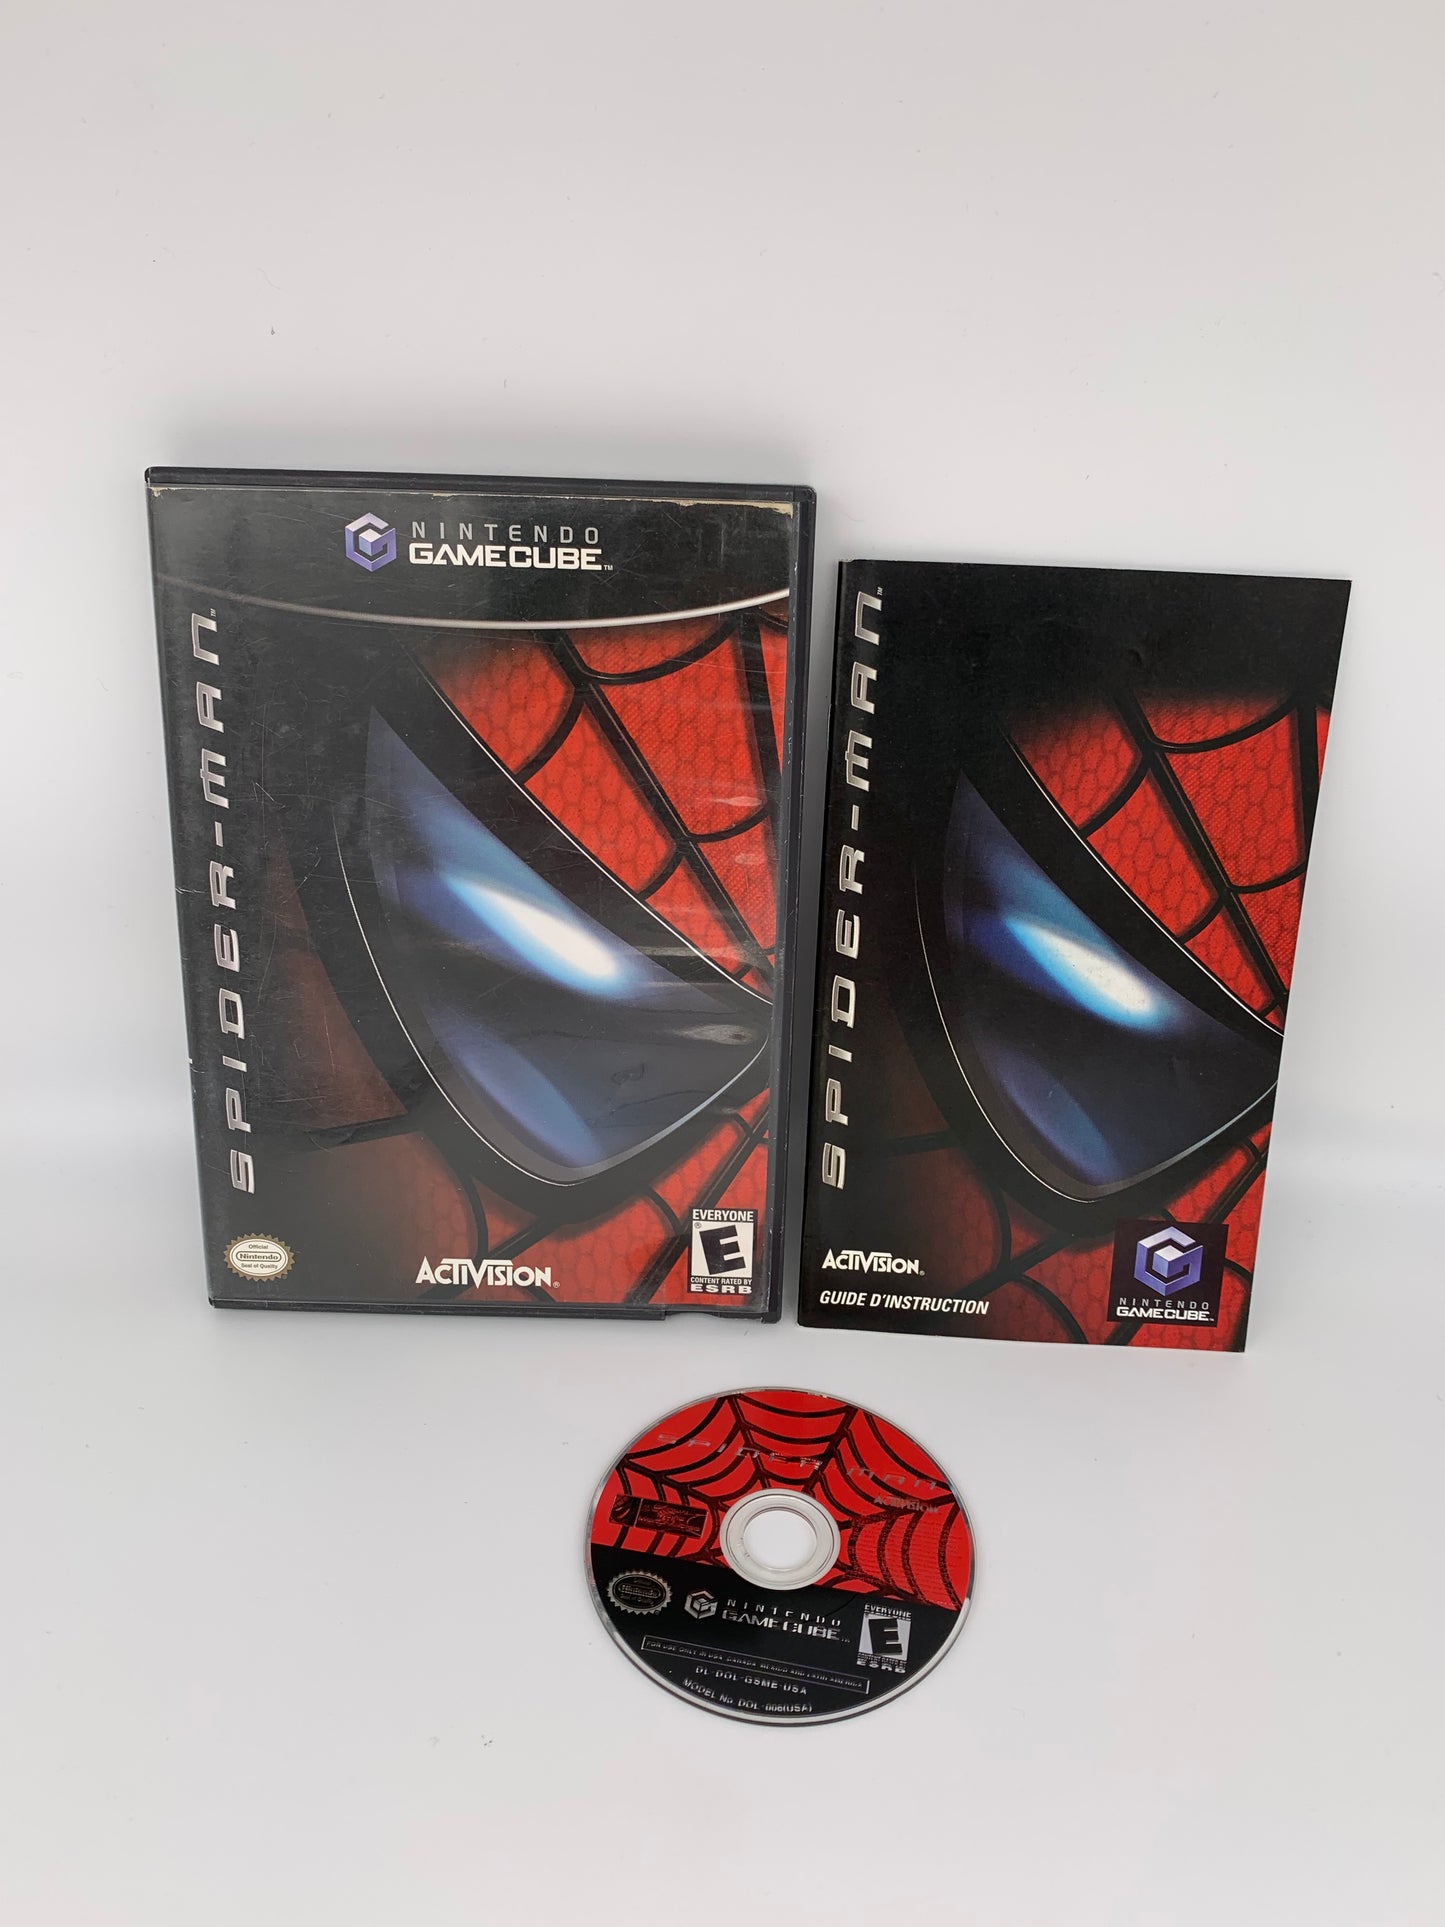 PiXEL-RETRO.COM : NINTENDO GAMECUBE COMPLETE CIB BOX MANUAL GAME NTSC SPIDER-MAN